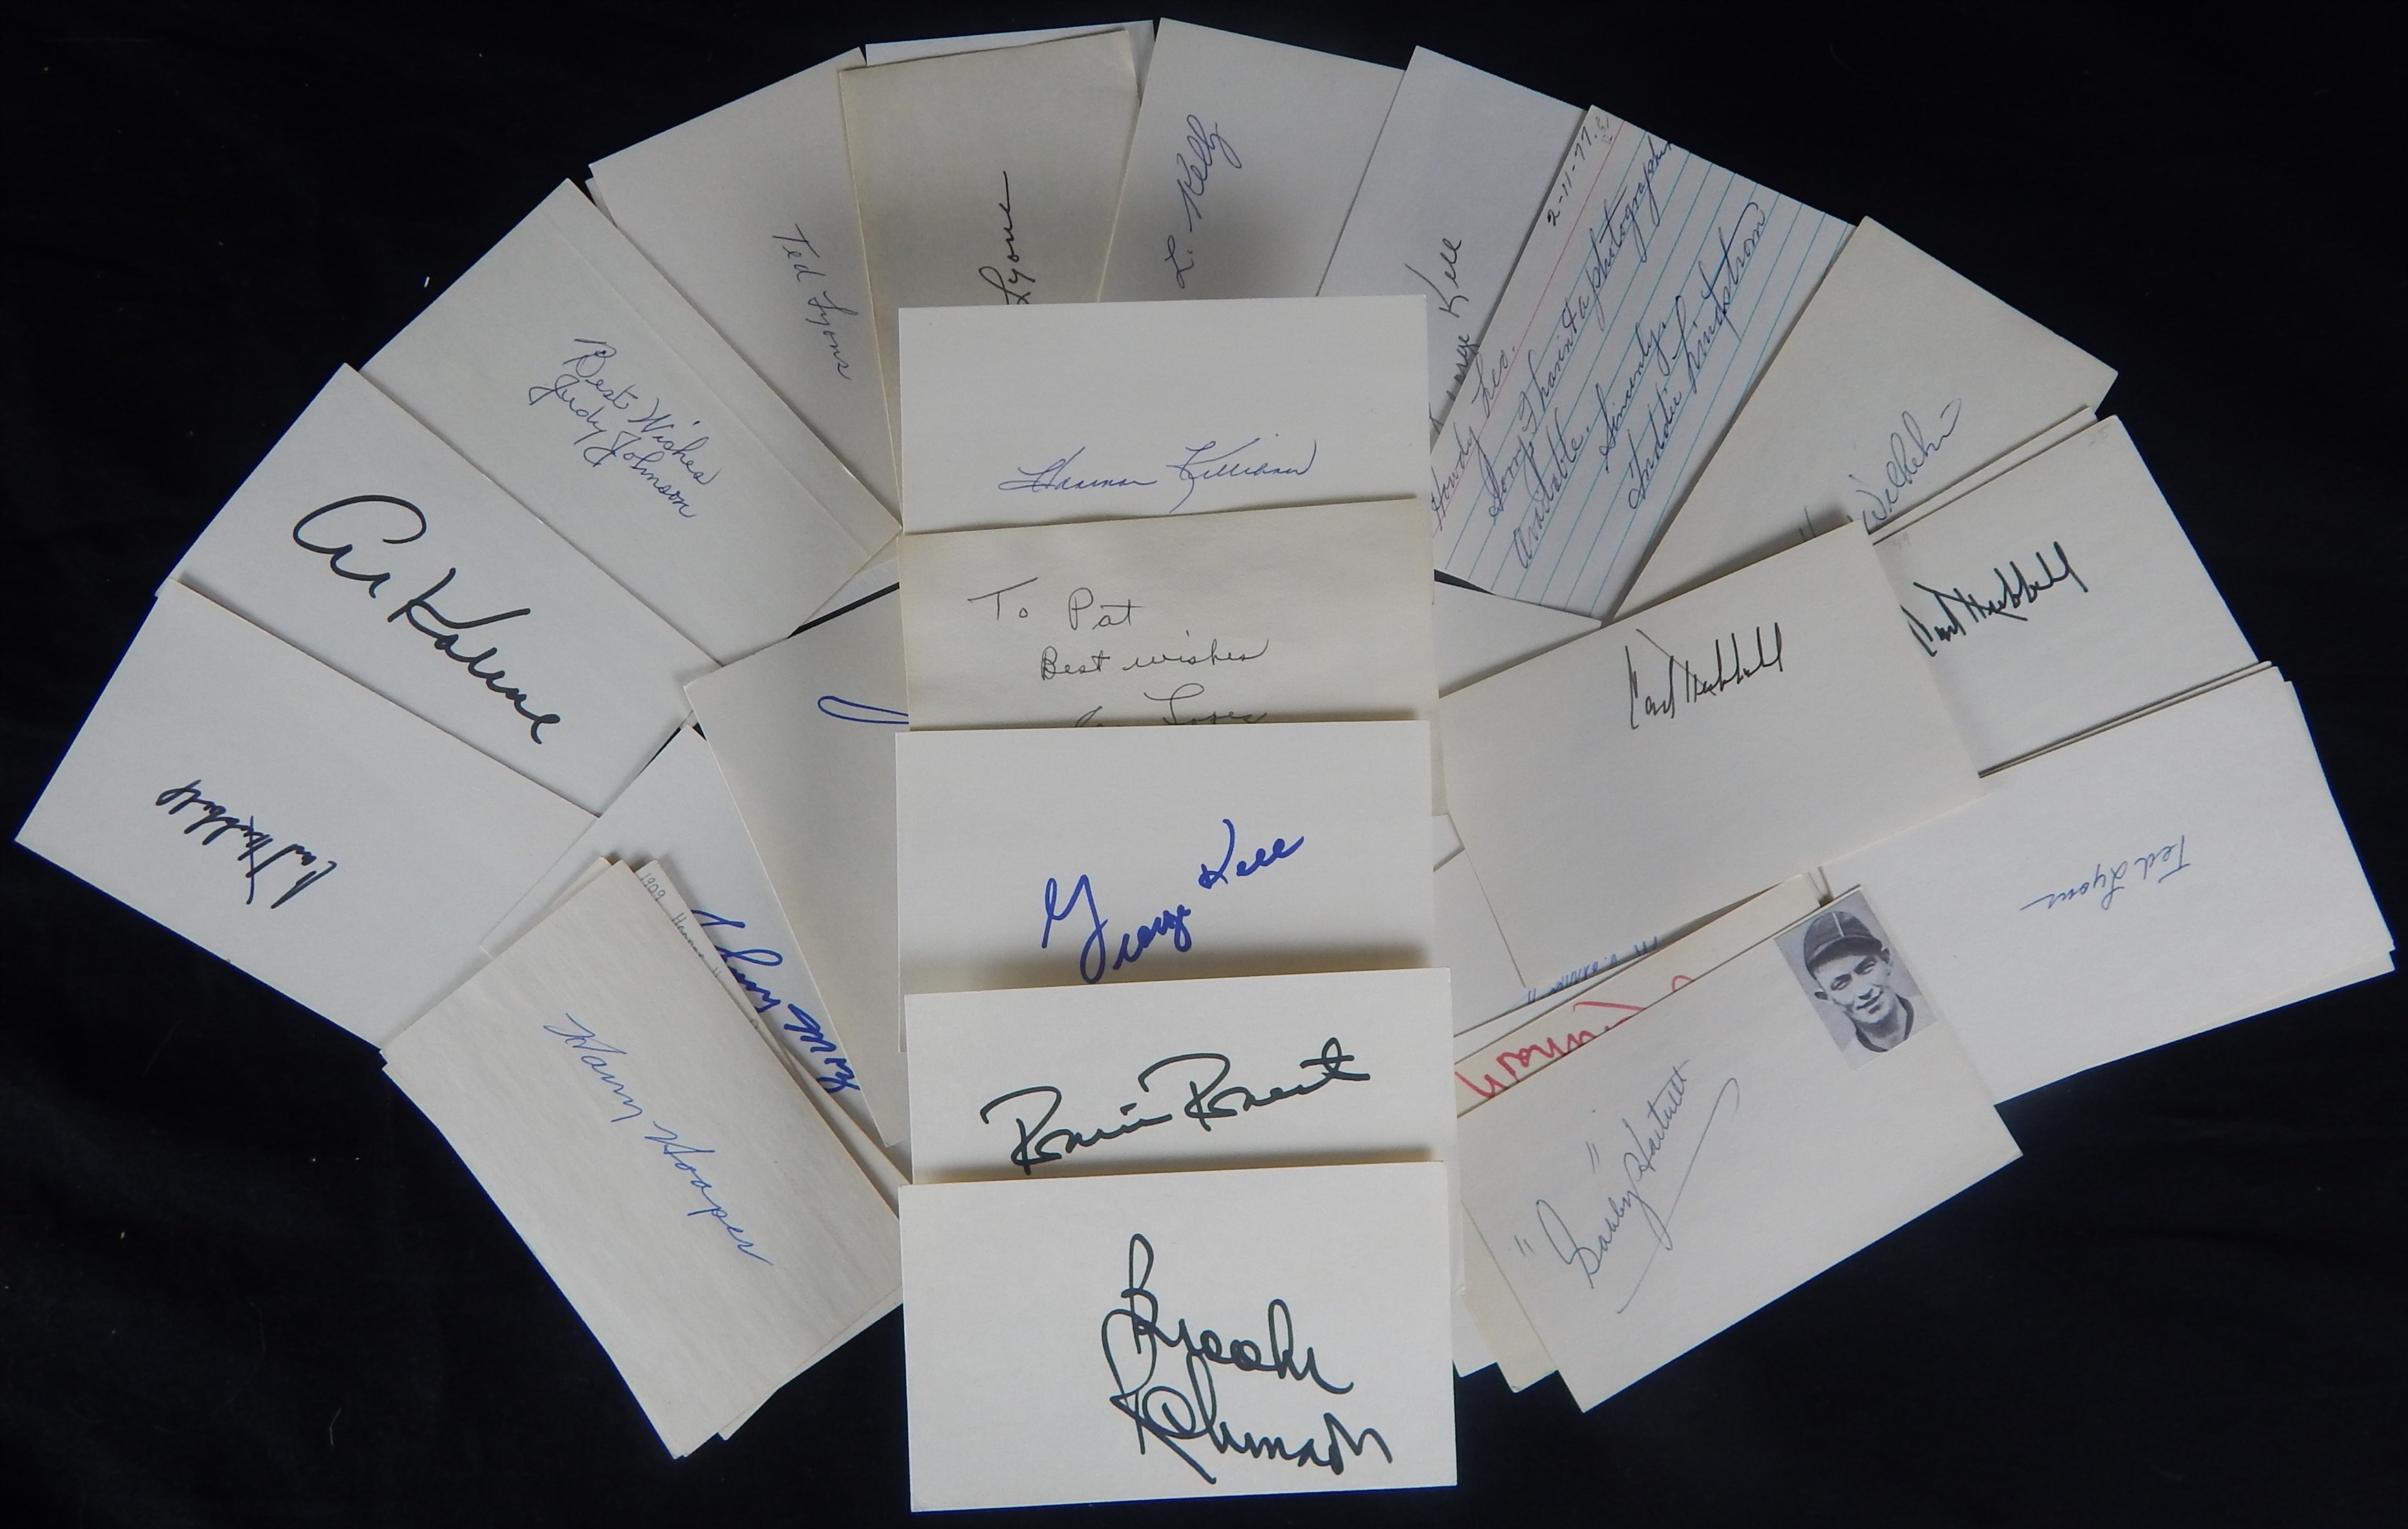 - Baseball Hall of Fame 3x5 Autograph Collection (41 Autographs)